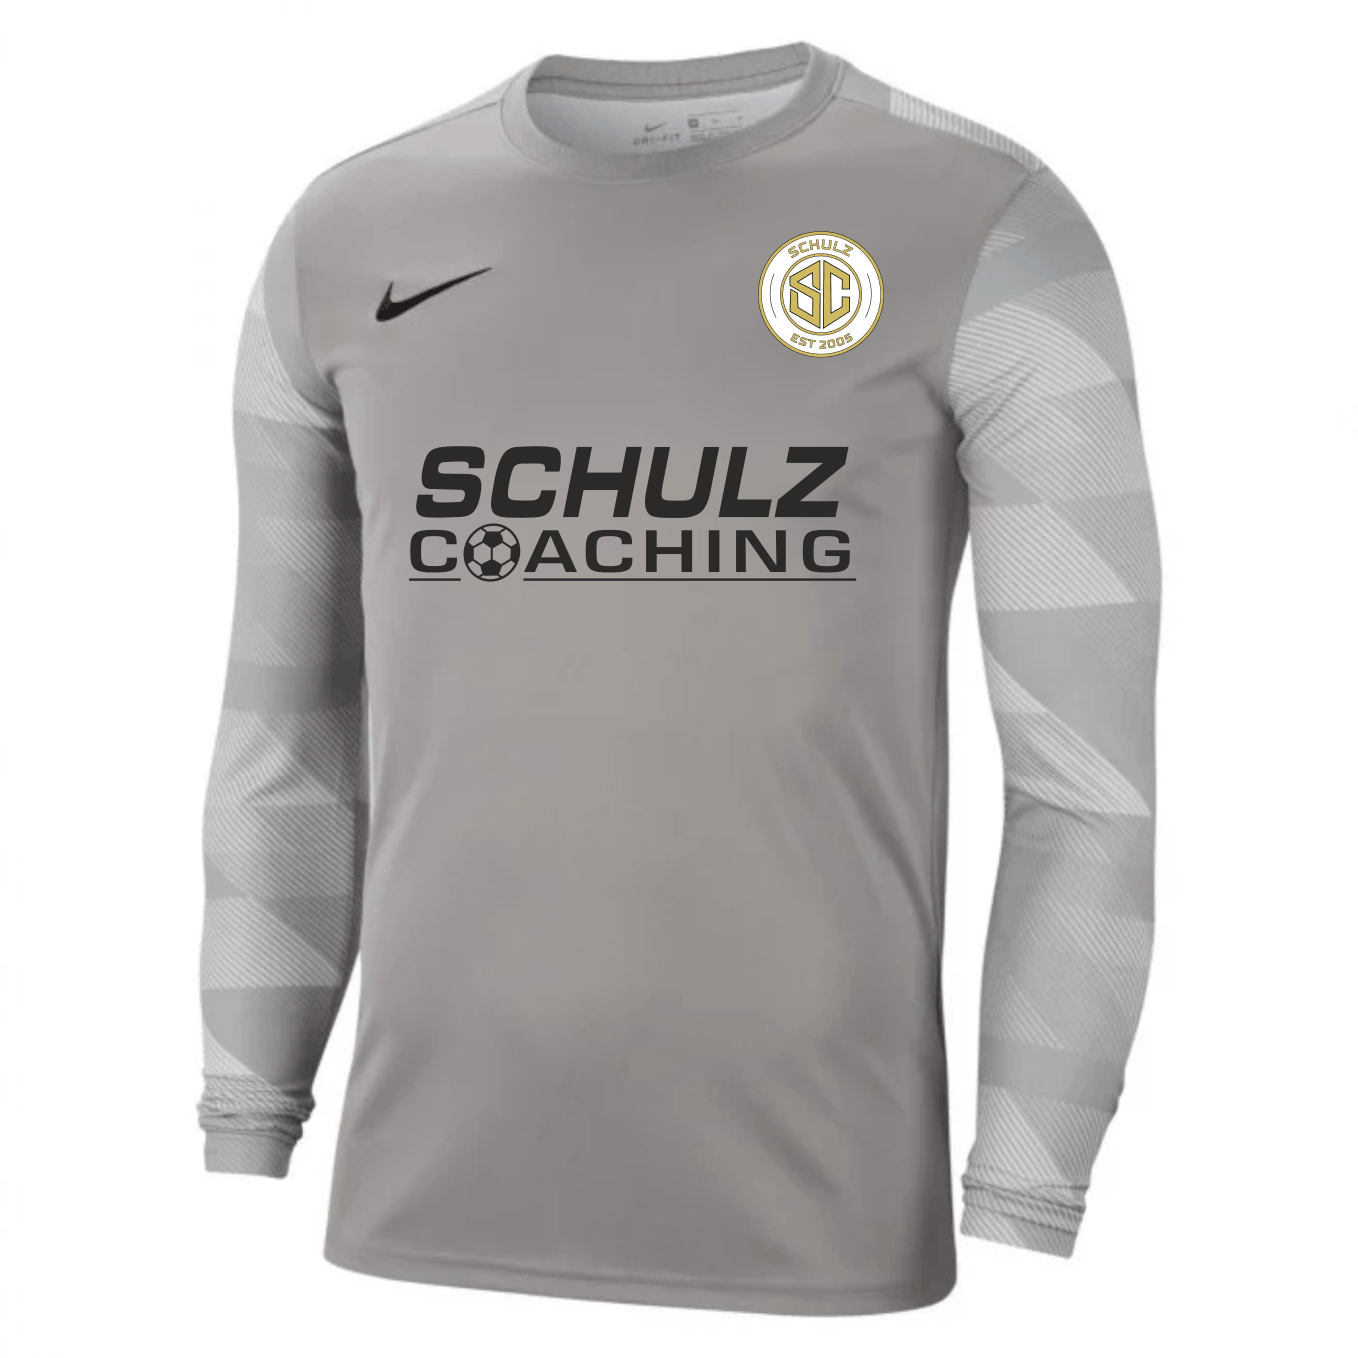 Schulz Coaching - Goalkeeper Kit Bundle